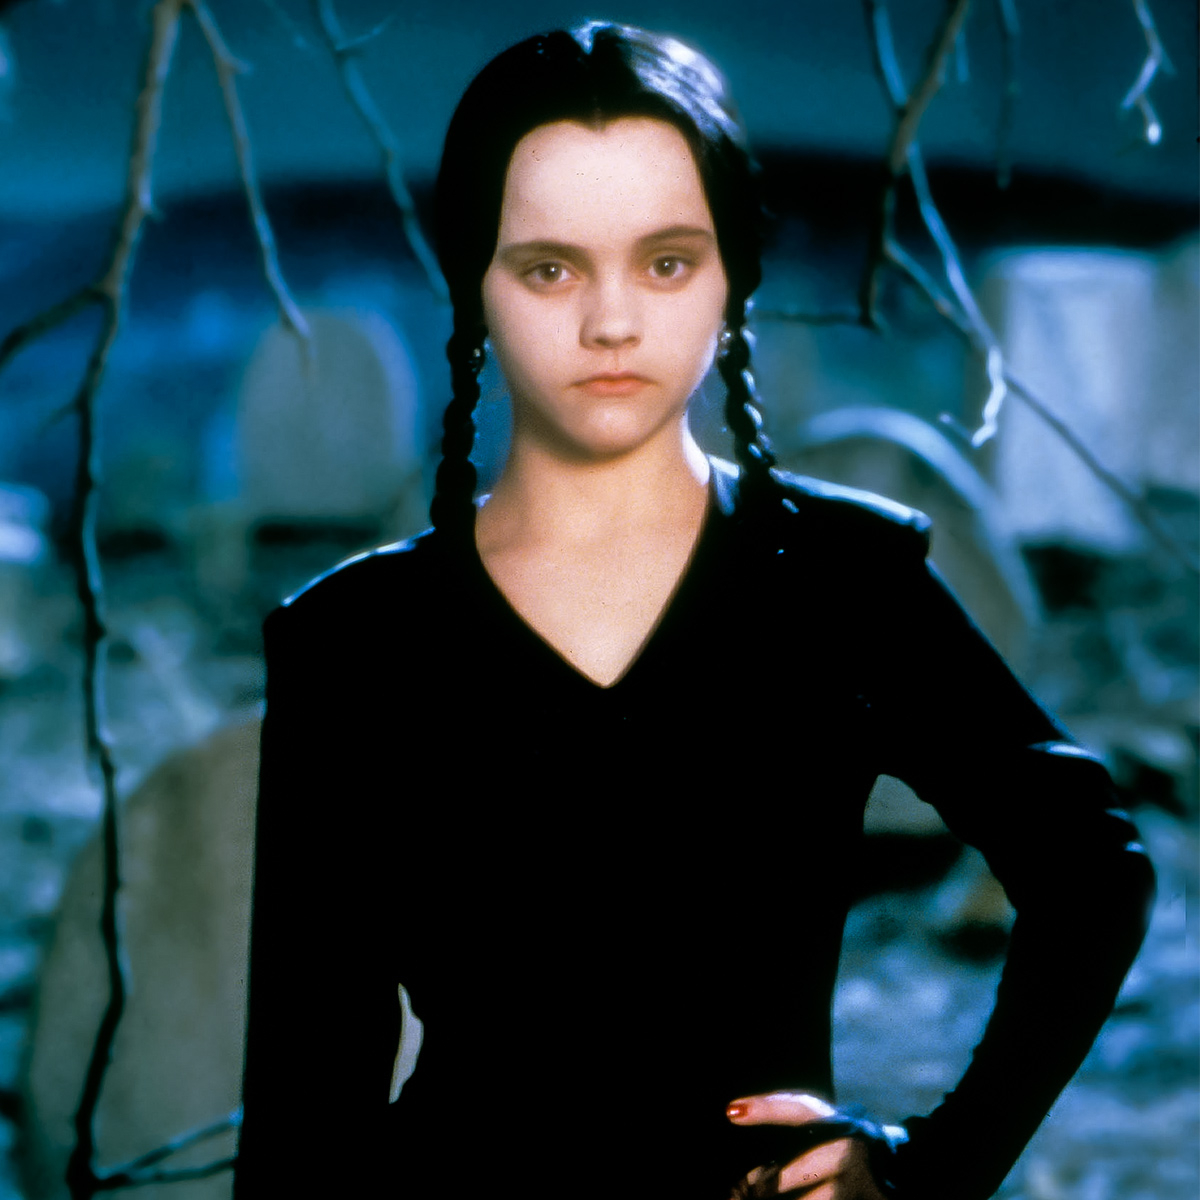 Wednesday Addams Is Getting the Tim Burton Treatment at Netflix